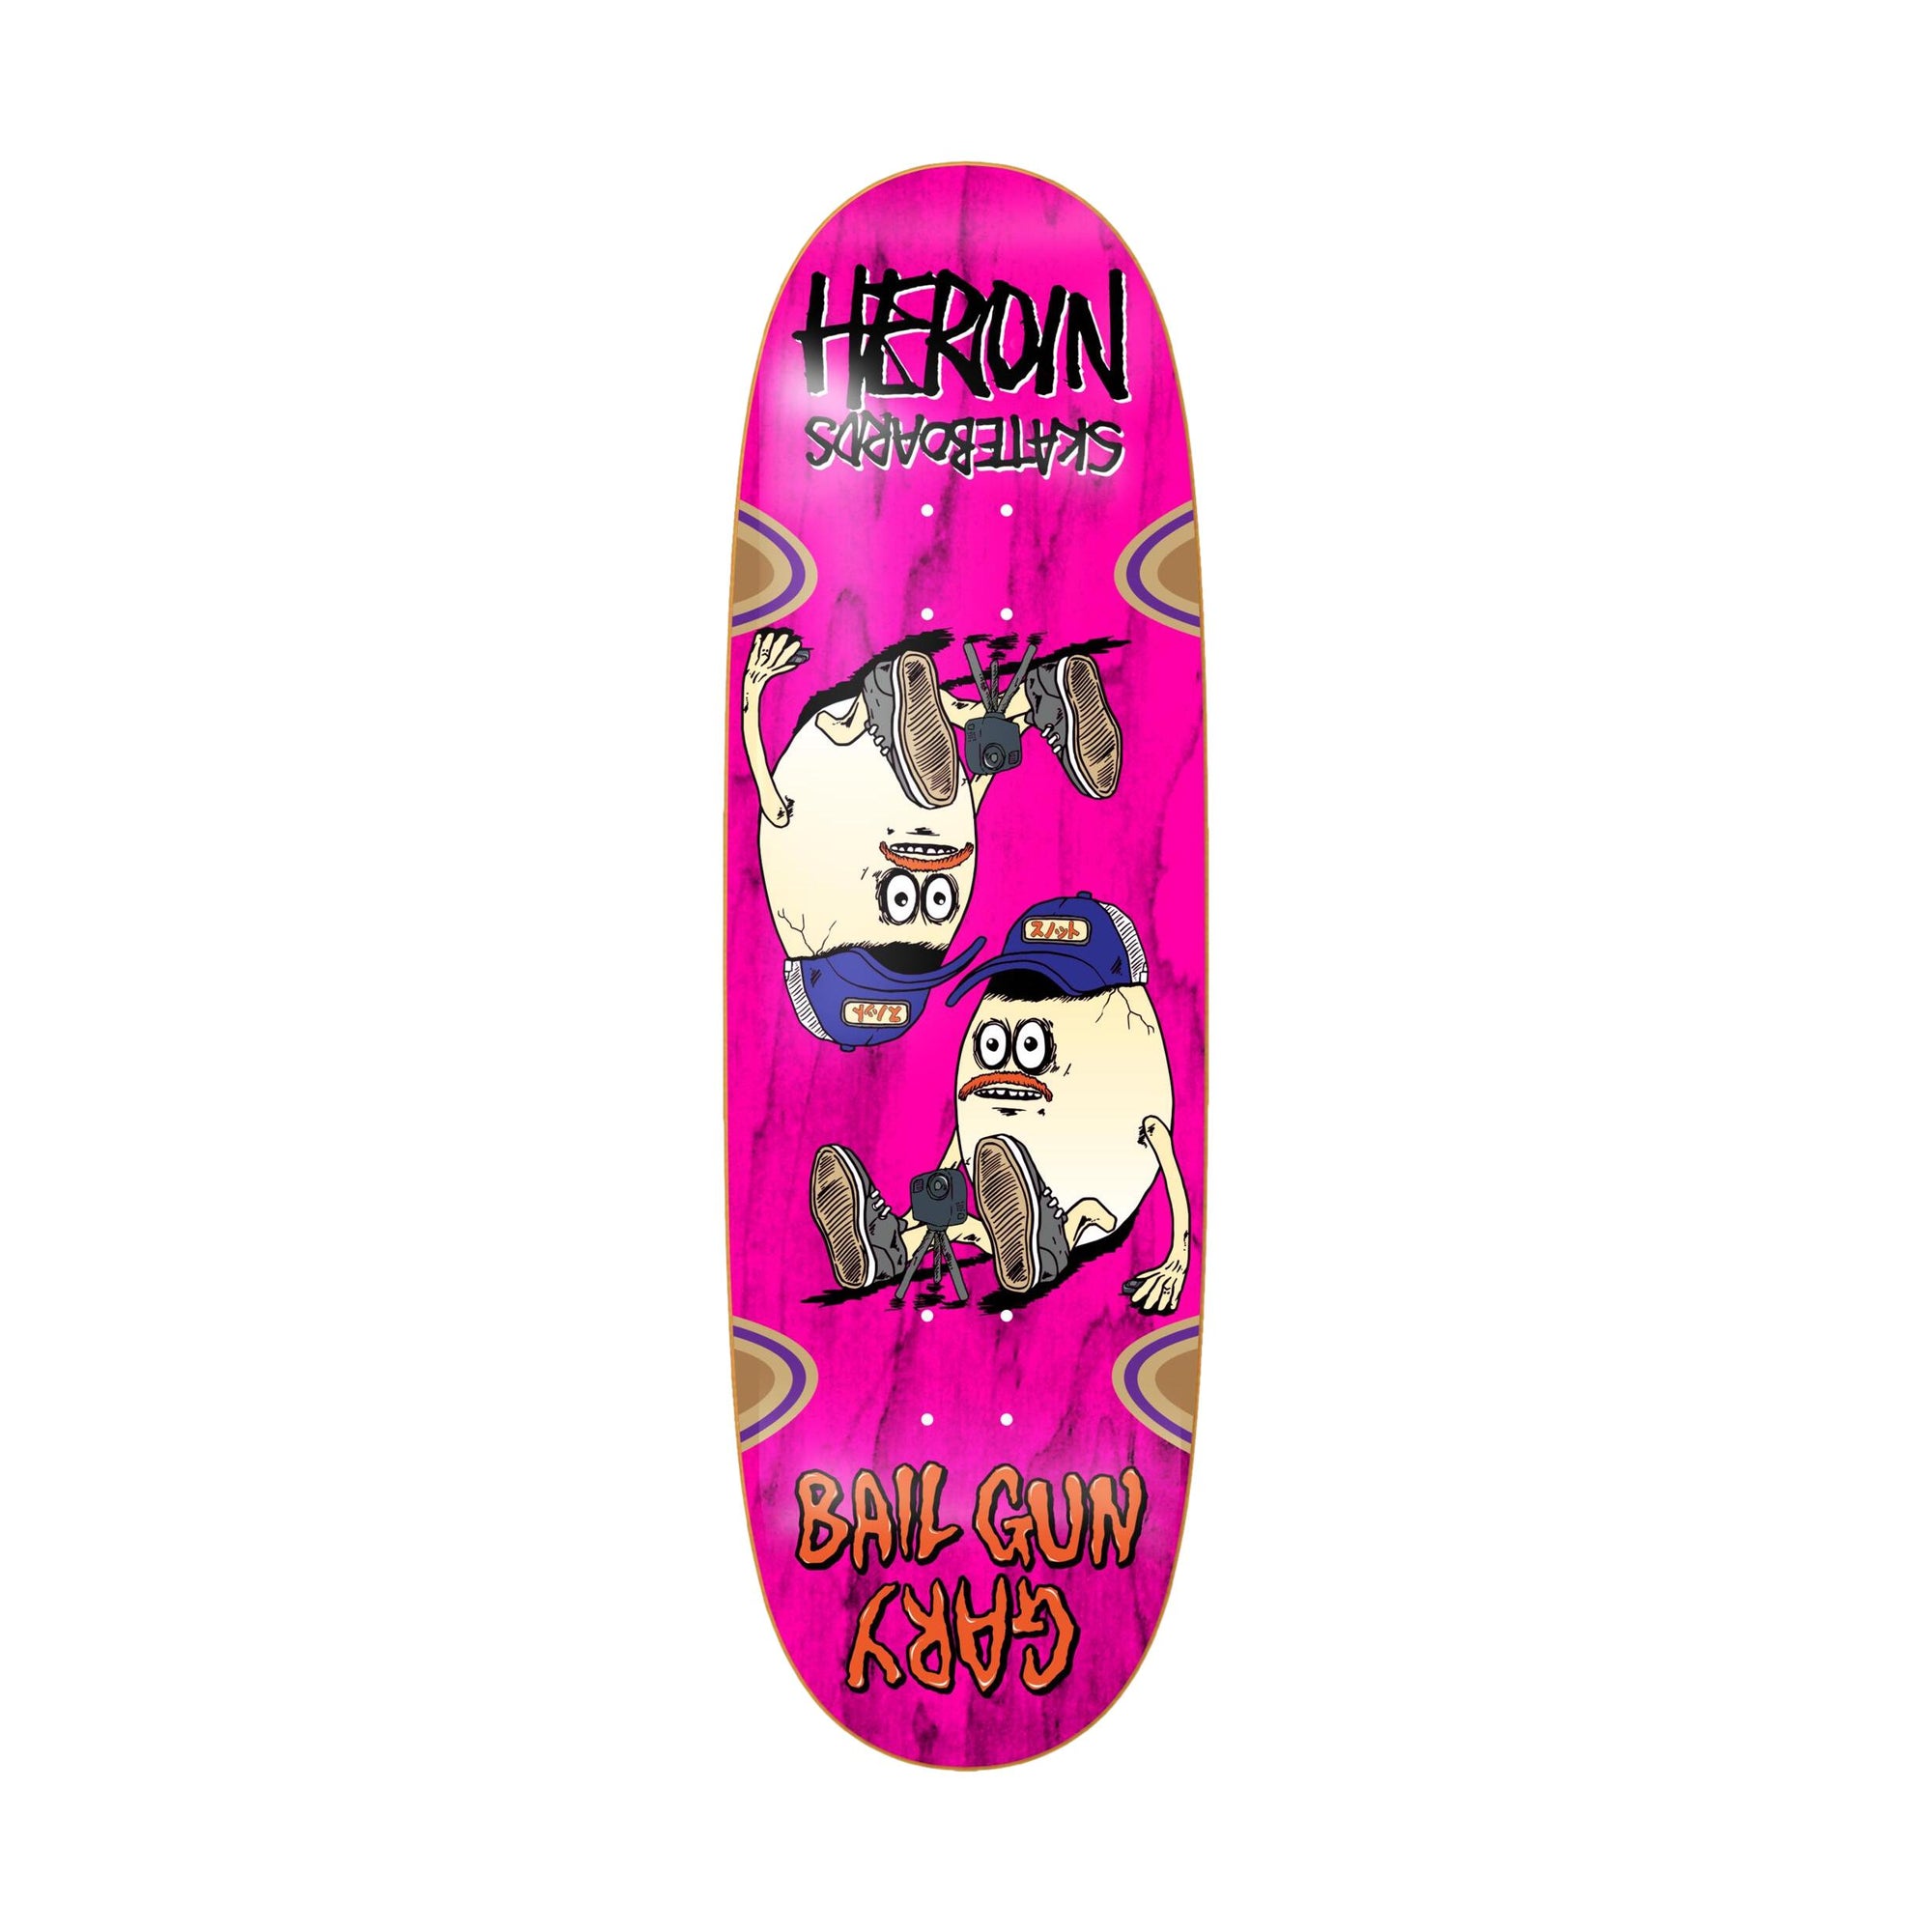 Heroin Bail Gun Gary 4 9.75" Deck - Venue Skateboards